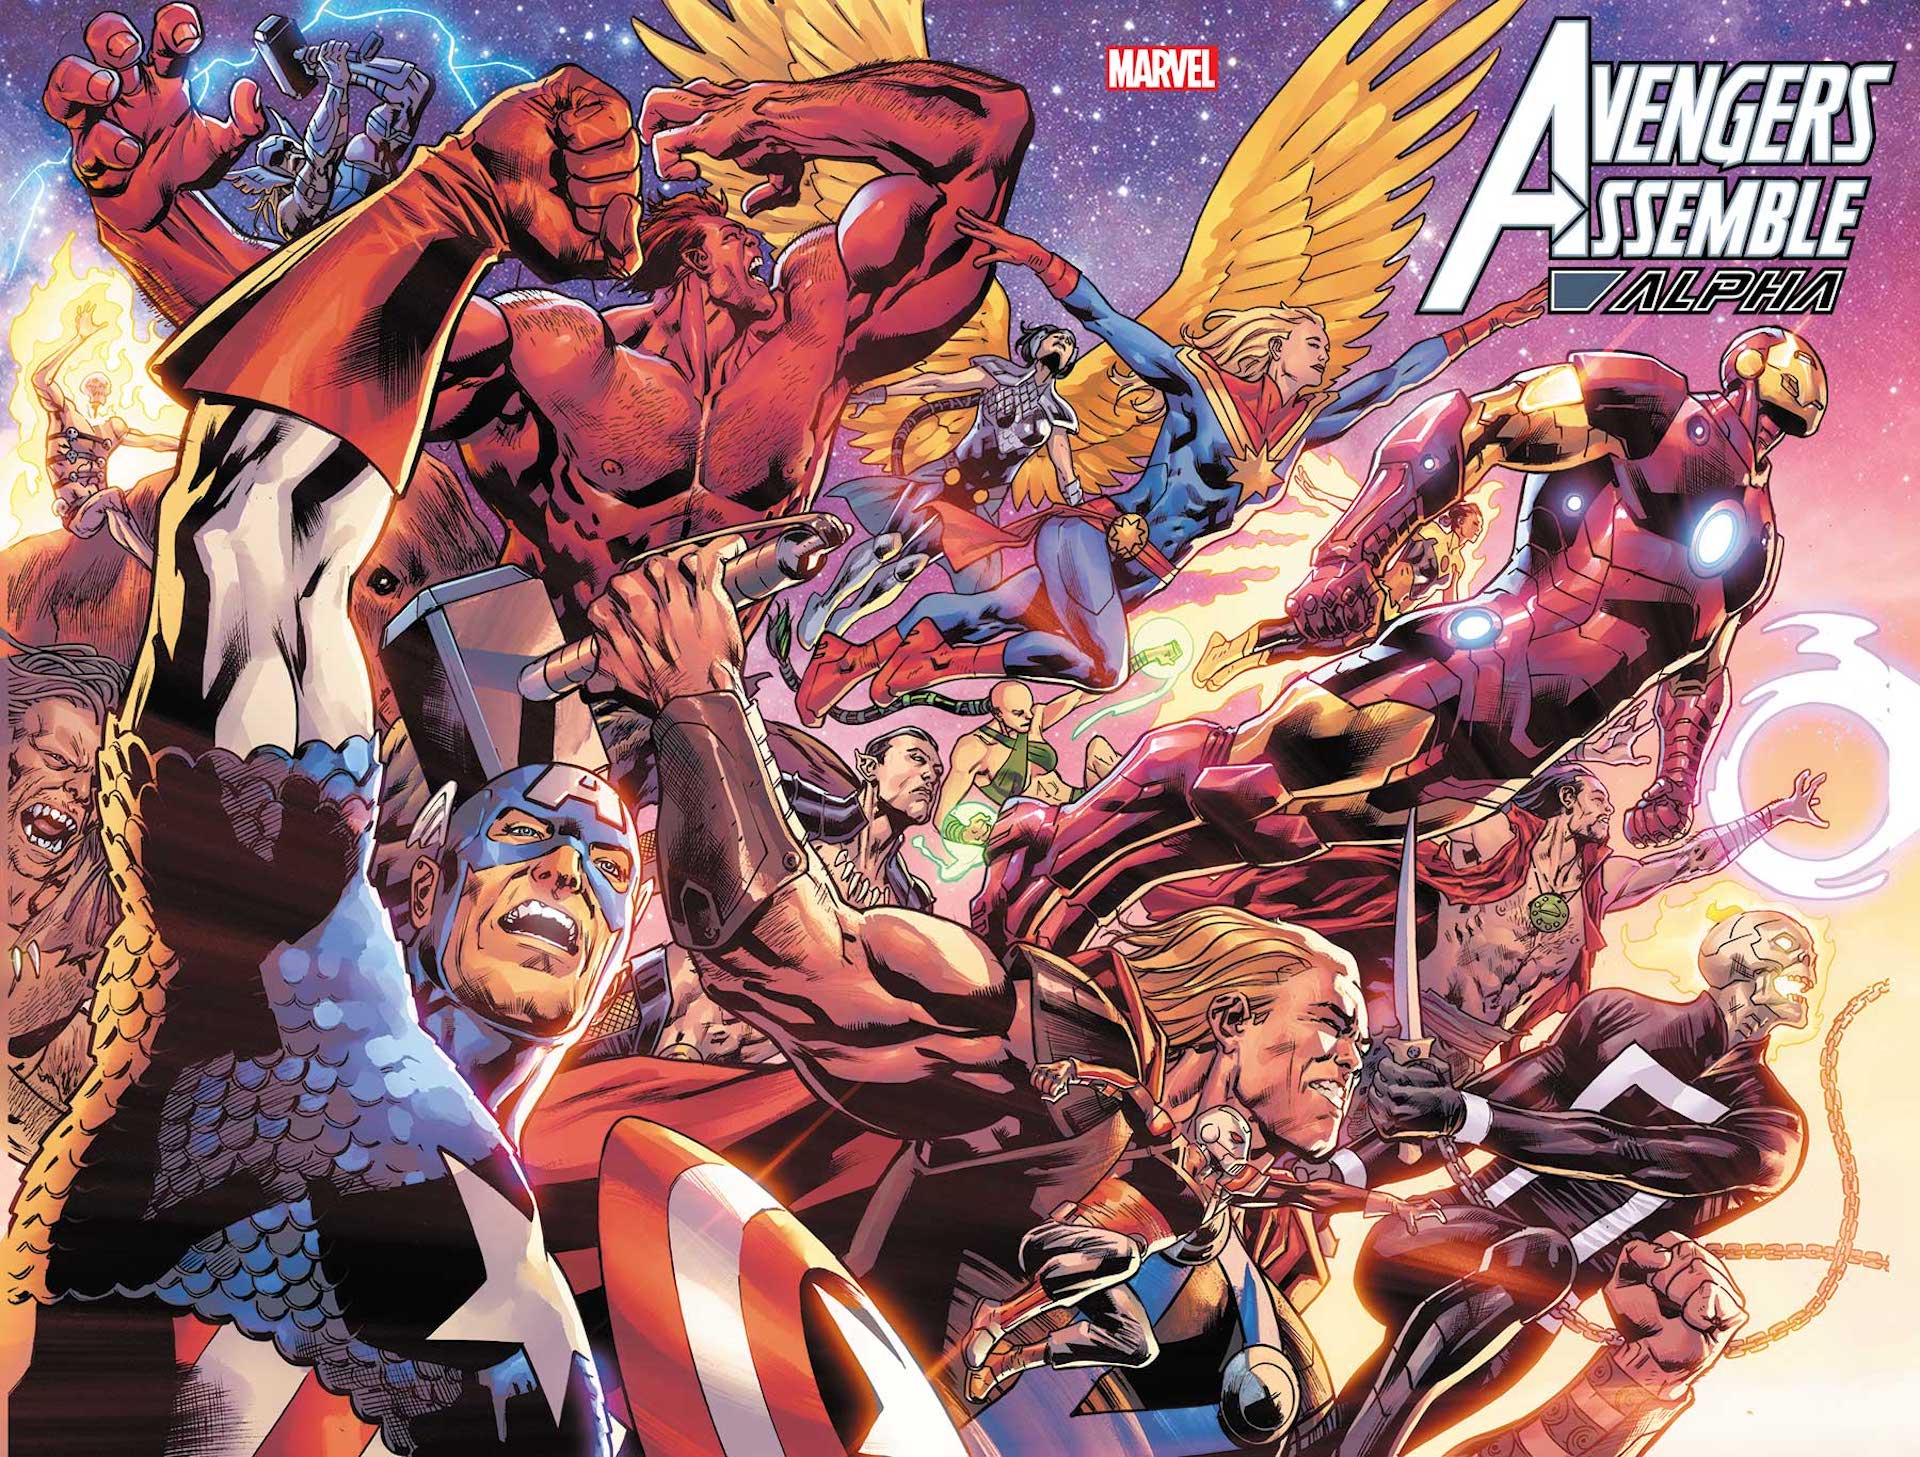 Marvel sheds light on the end of Jason Aaron's era of Avengers in 'Avengers Assemble'